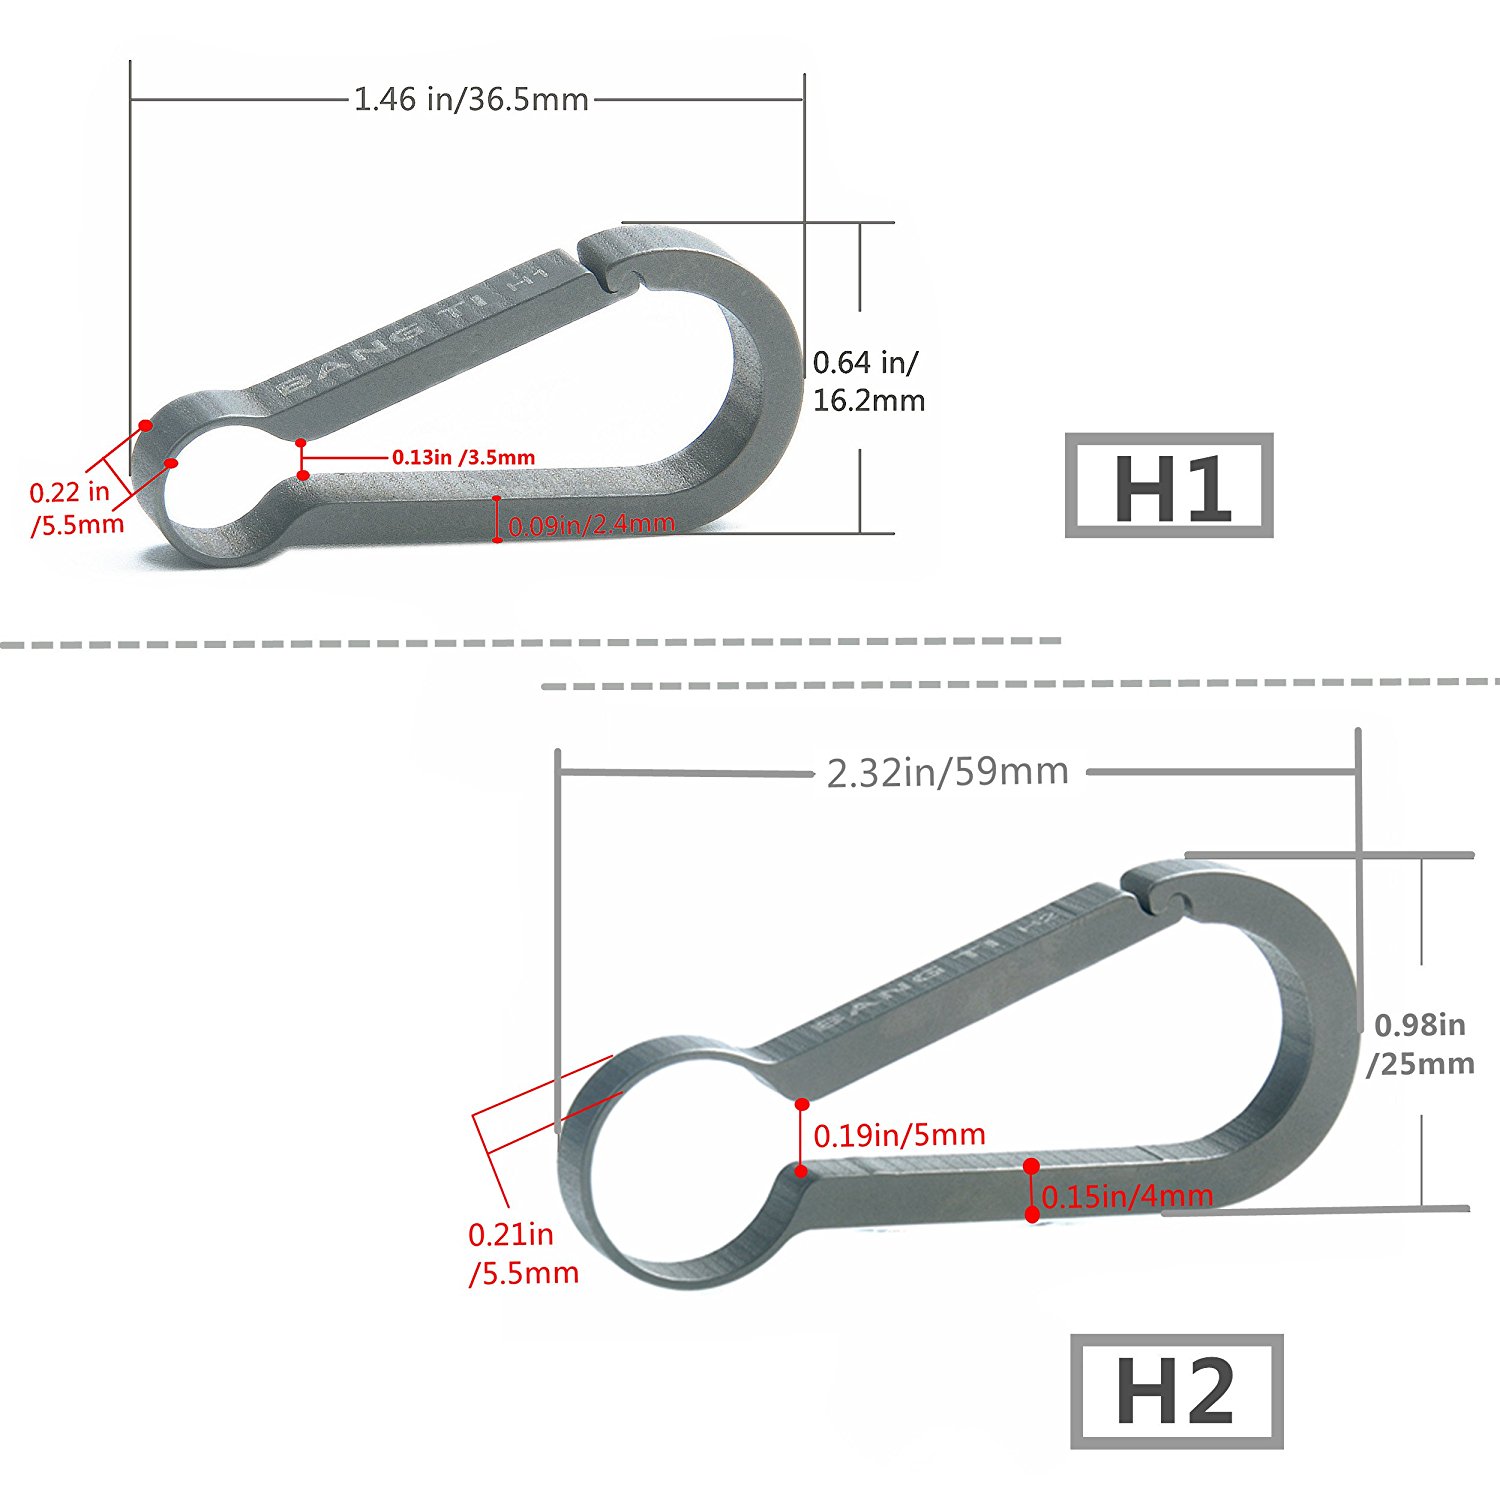 BANG-TI-H1-37mm-Titanium-Quick-Release-Keychain-Belt-Loop-Hook-Key-Clip-1146946